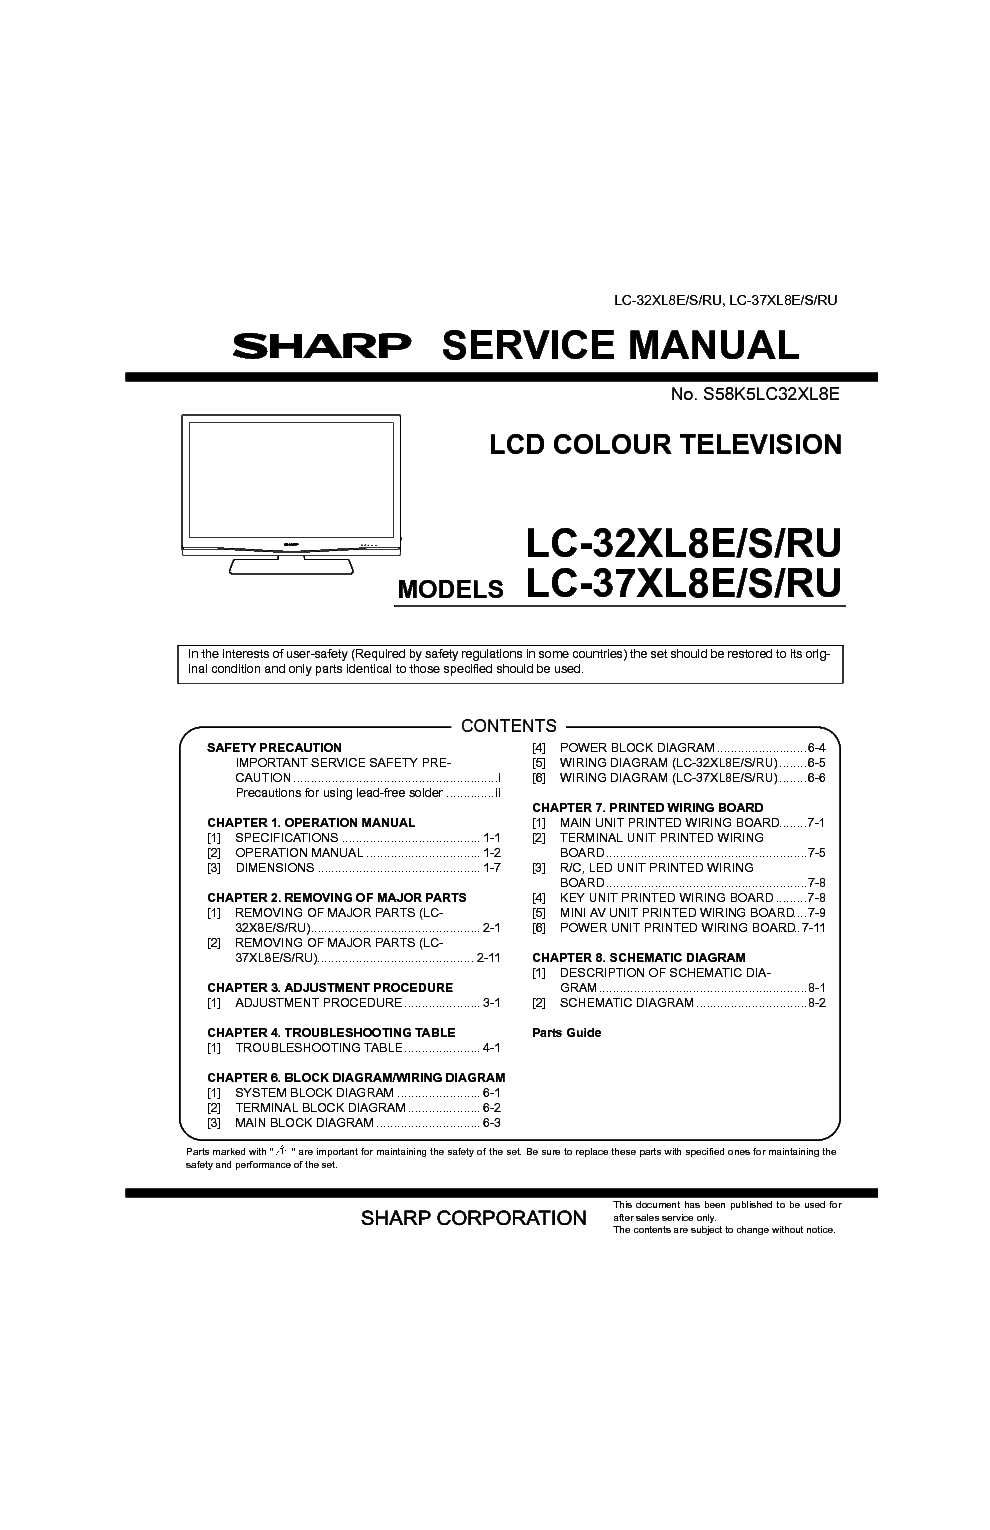 Sharp LC-15AV7U TV Service manual PDF View/Download